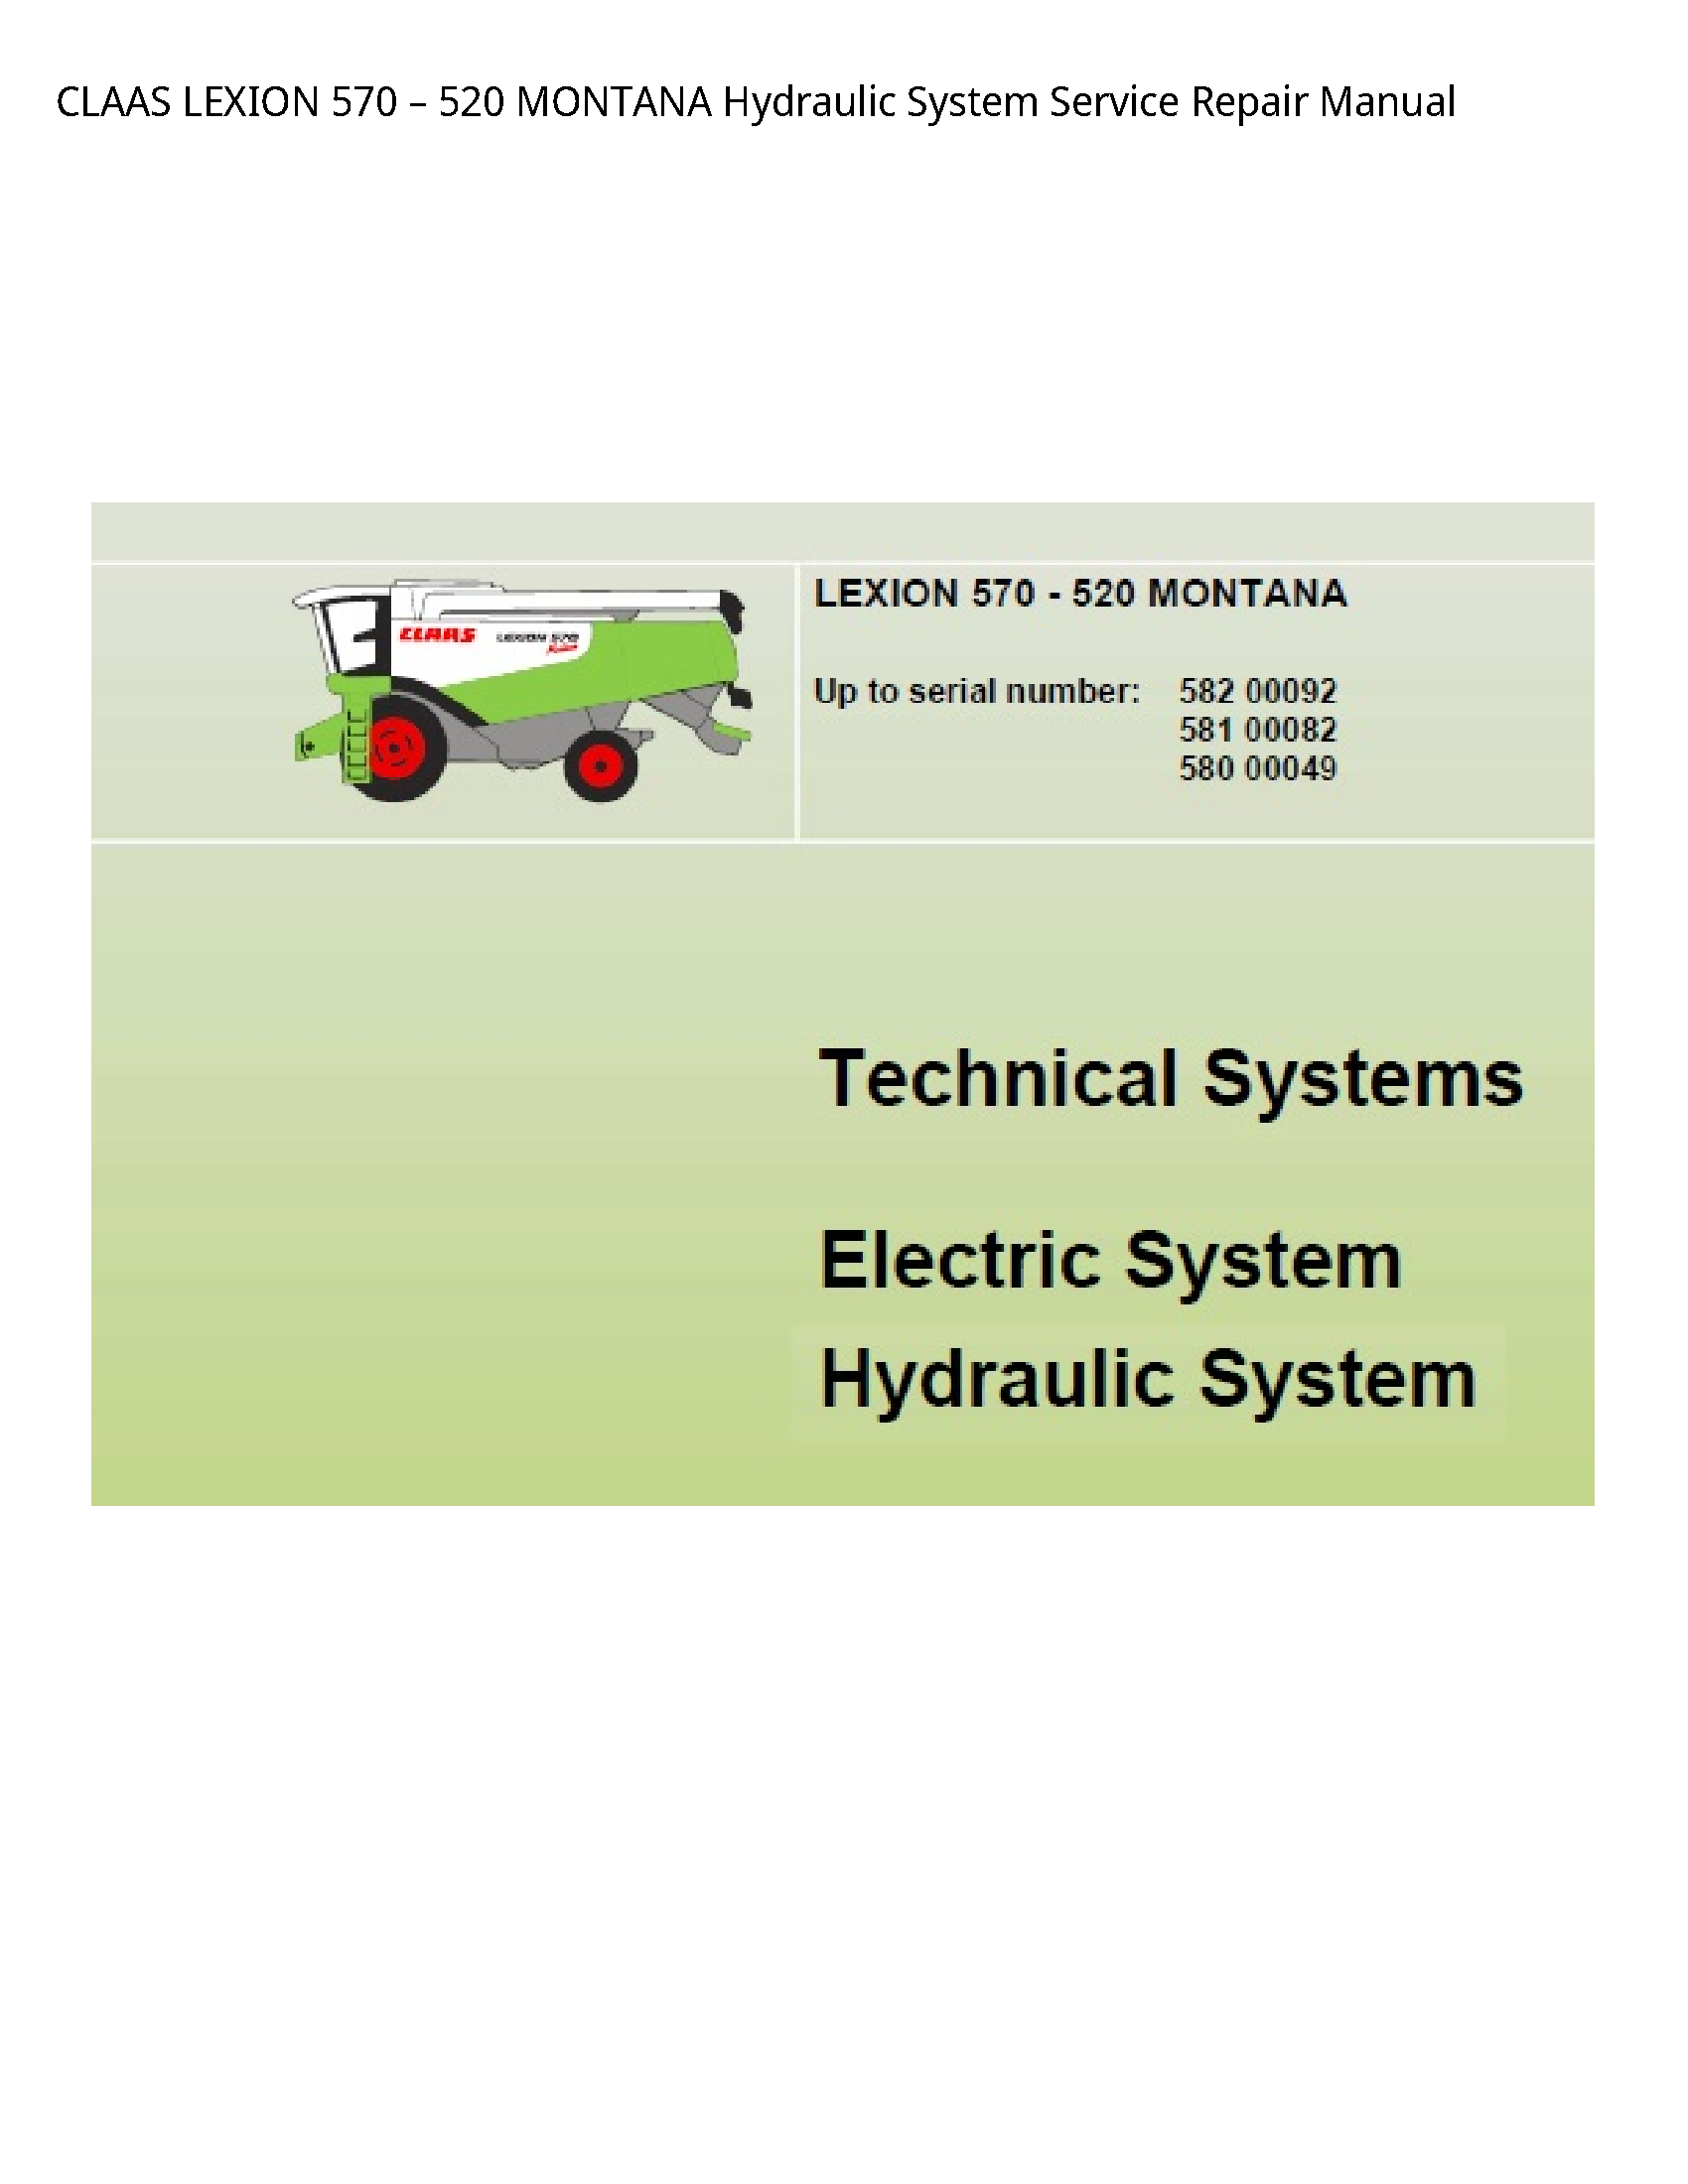 Claas 570 LEXION MONTANA Hydraulic System manual